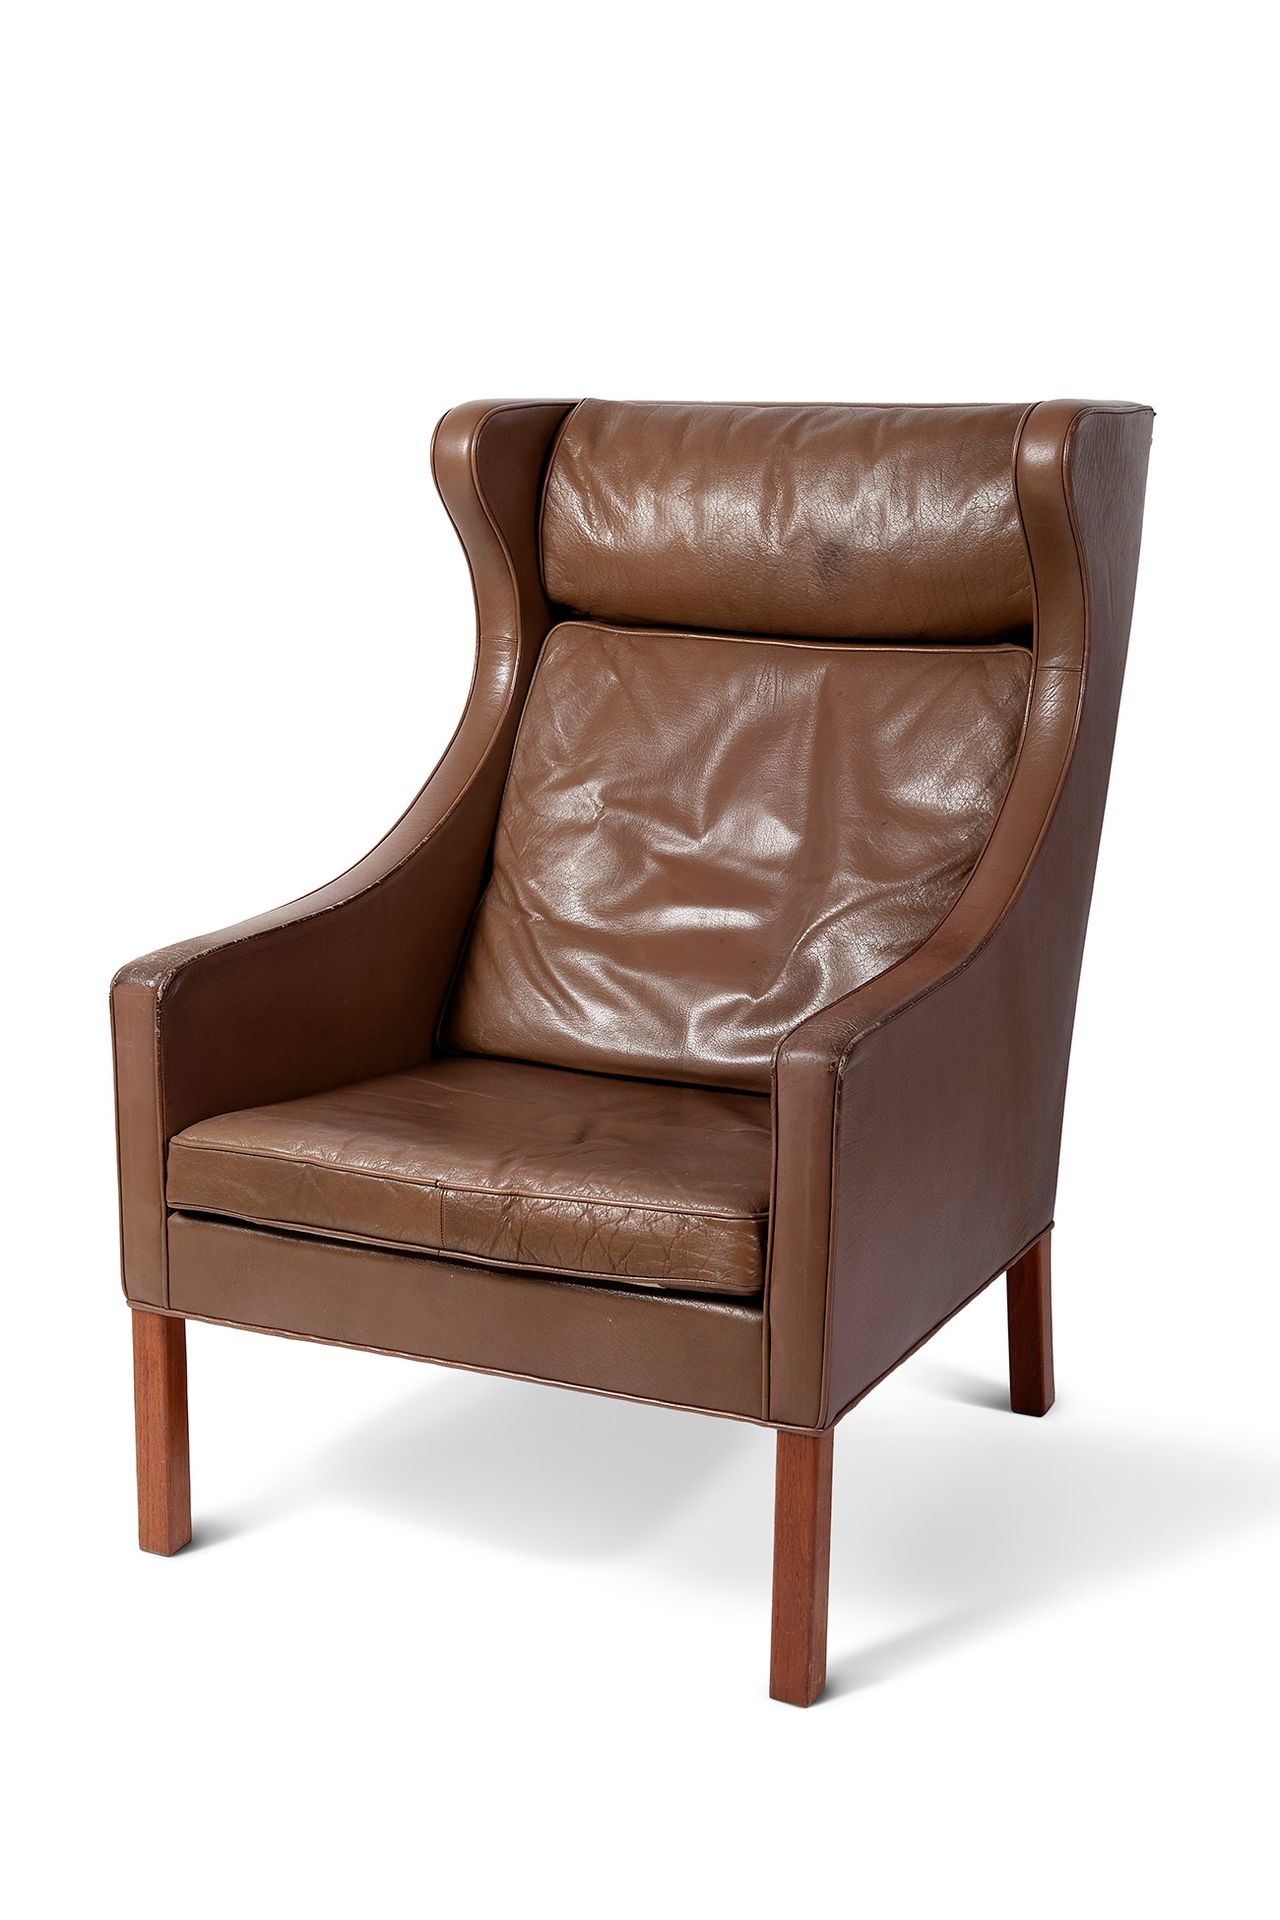 Danish design armchair, 60s-70s. Danish design armchair, 60s-70s.
Wood and leath&hellip;